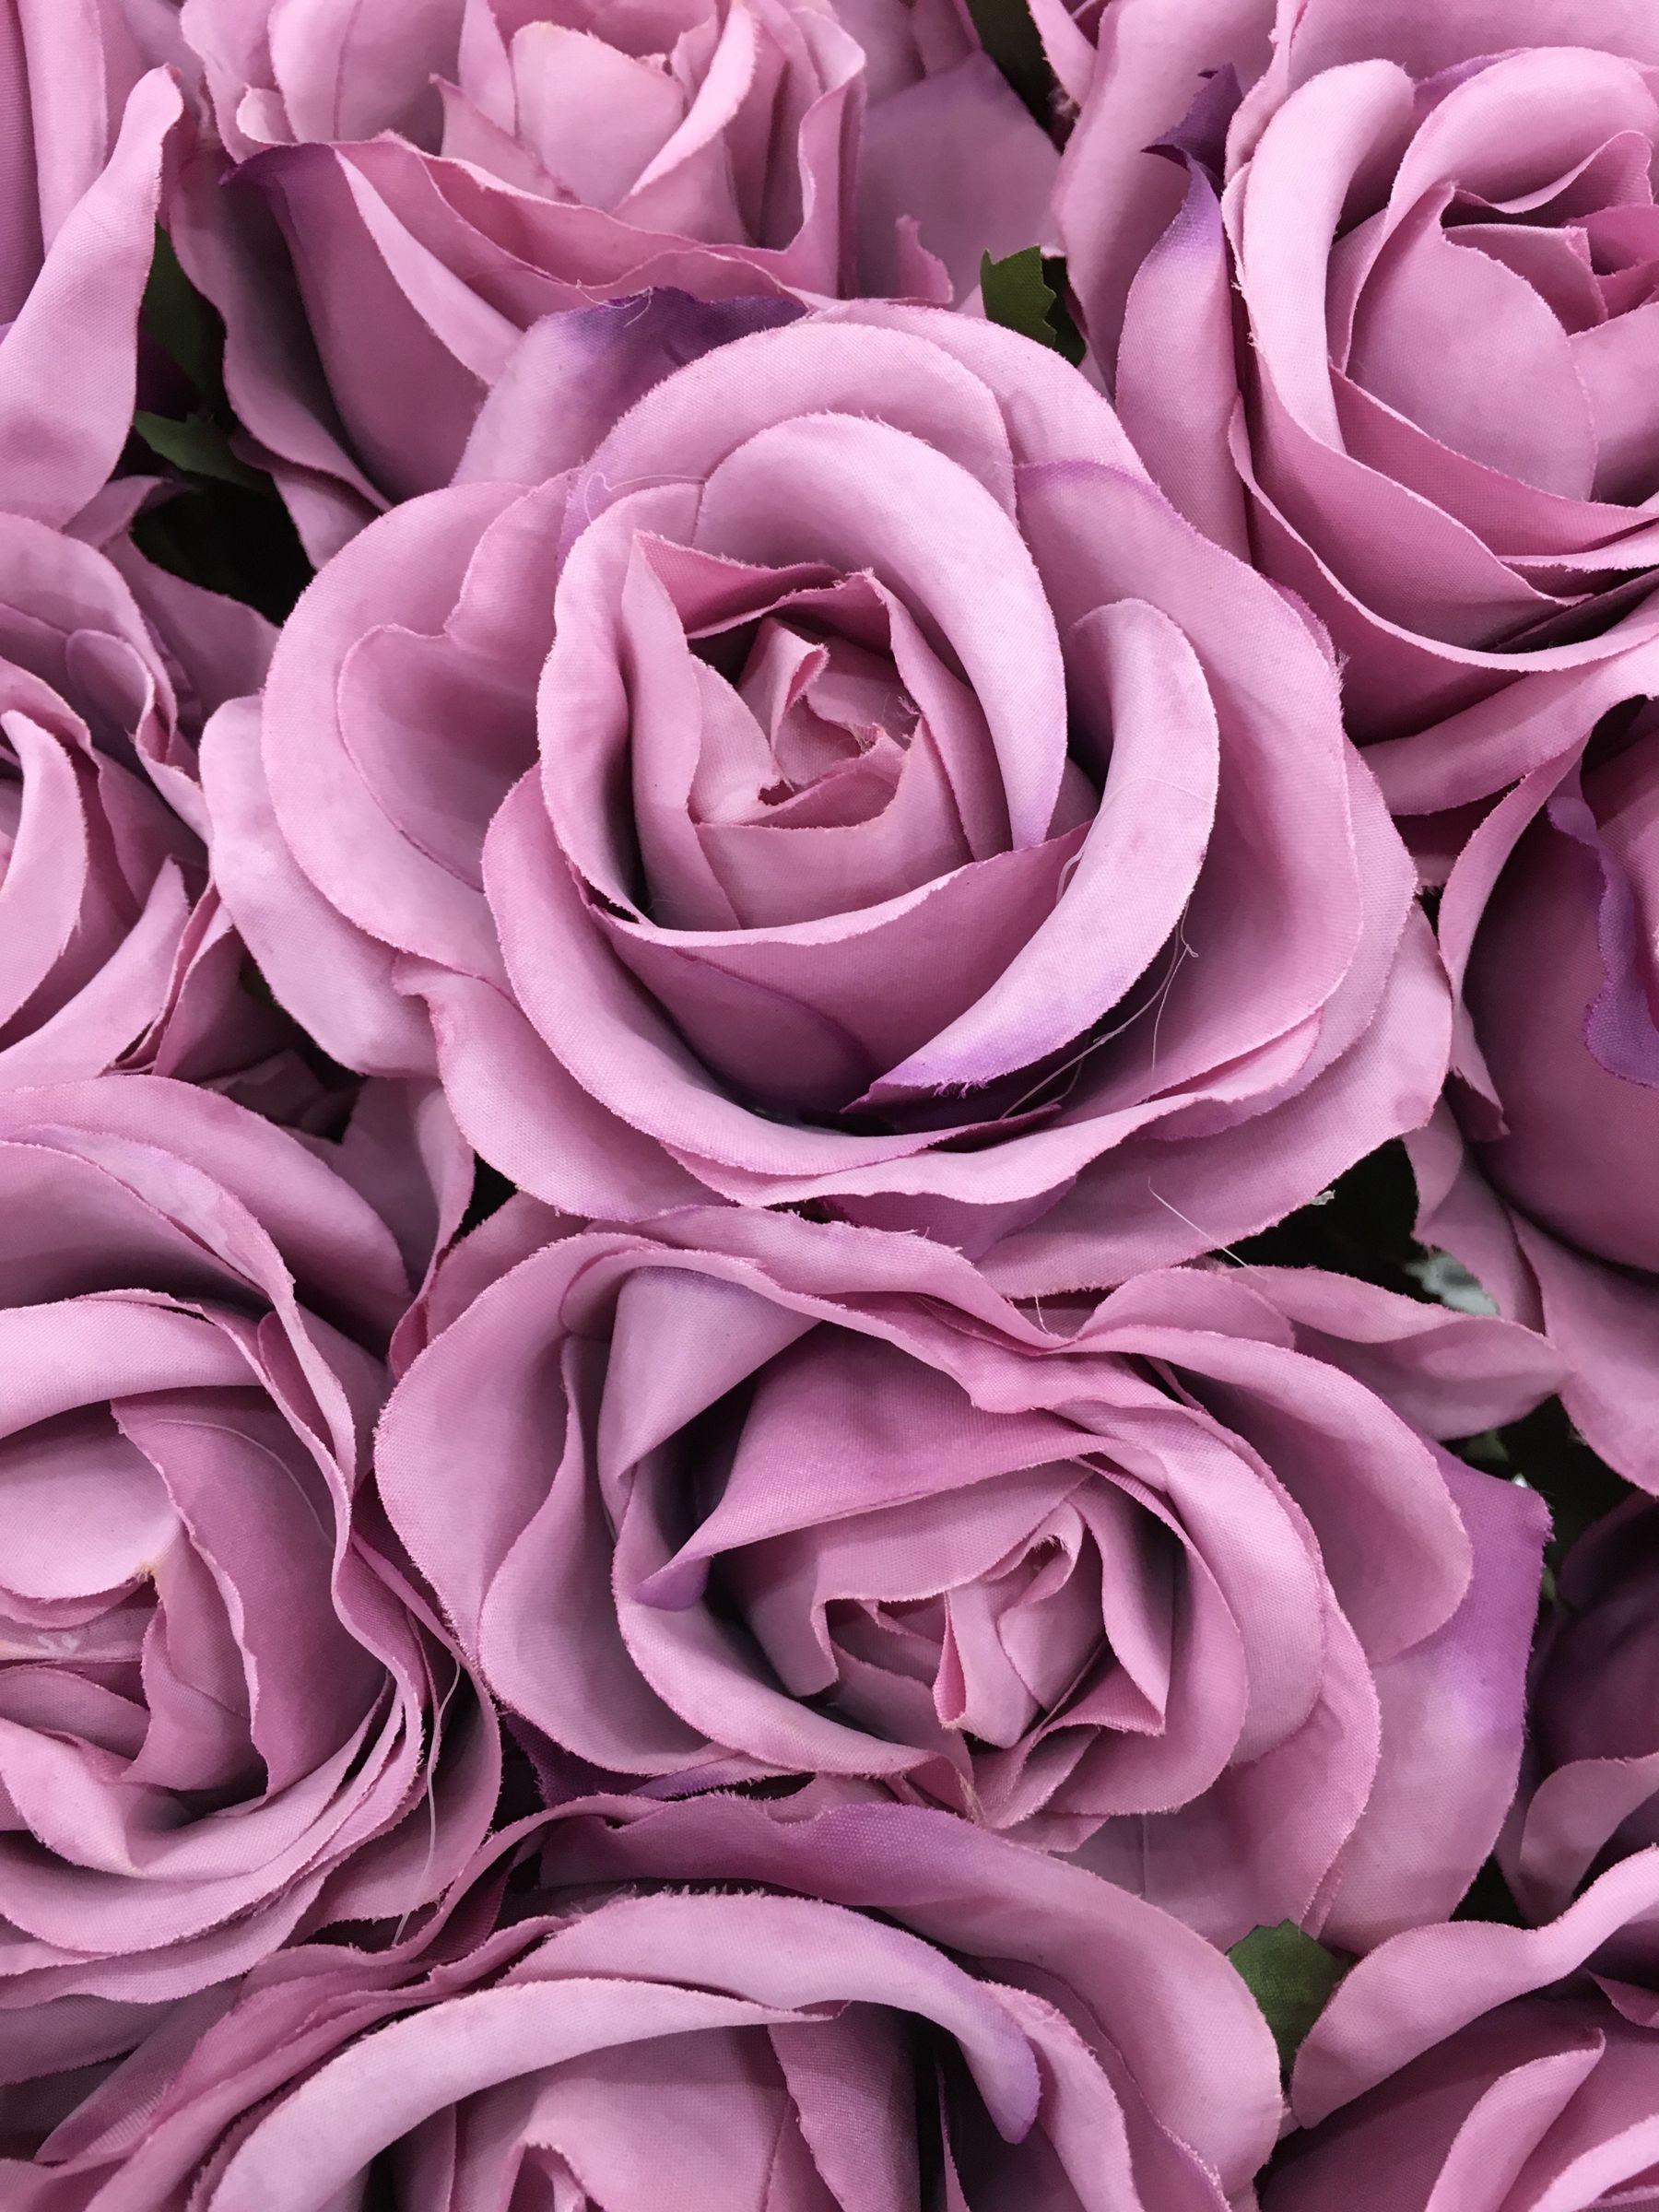 The color purple rose flowers 52757